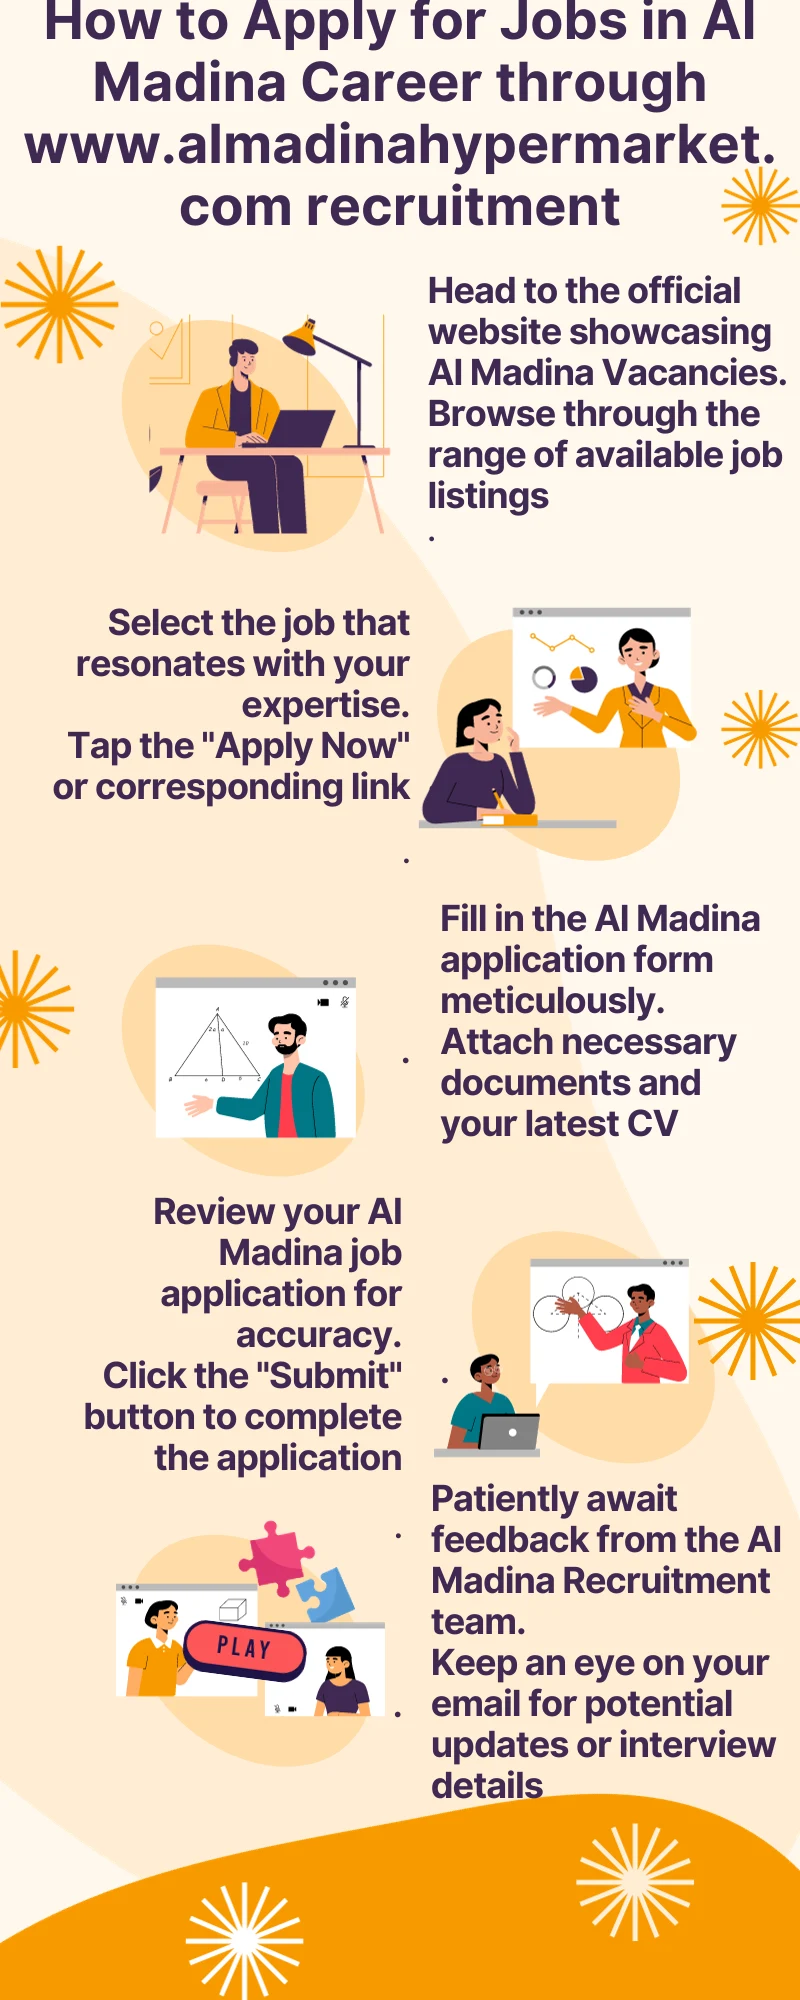 How to Apply for Jobs in Al Madina Career through www.almadinahypermarket.com recruitment